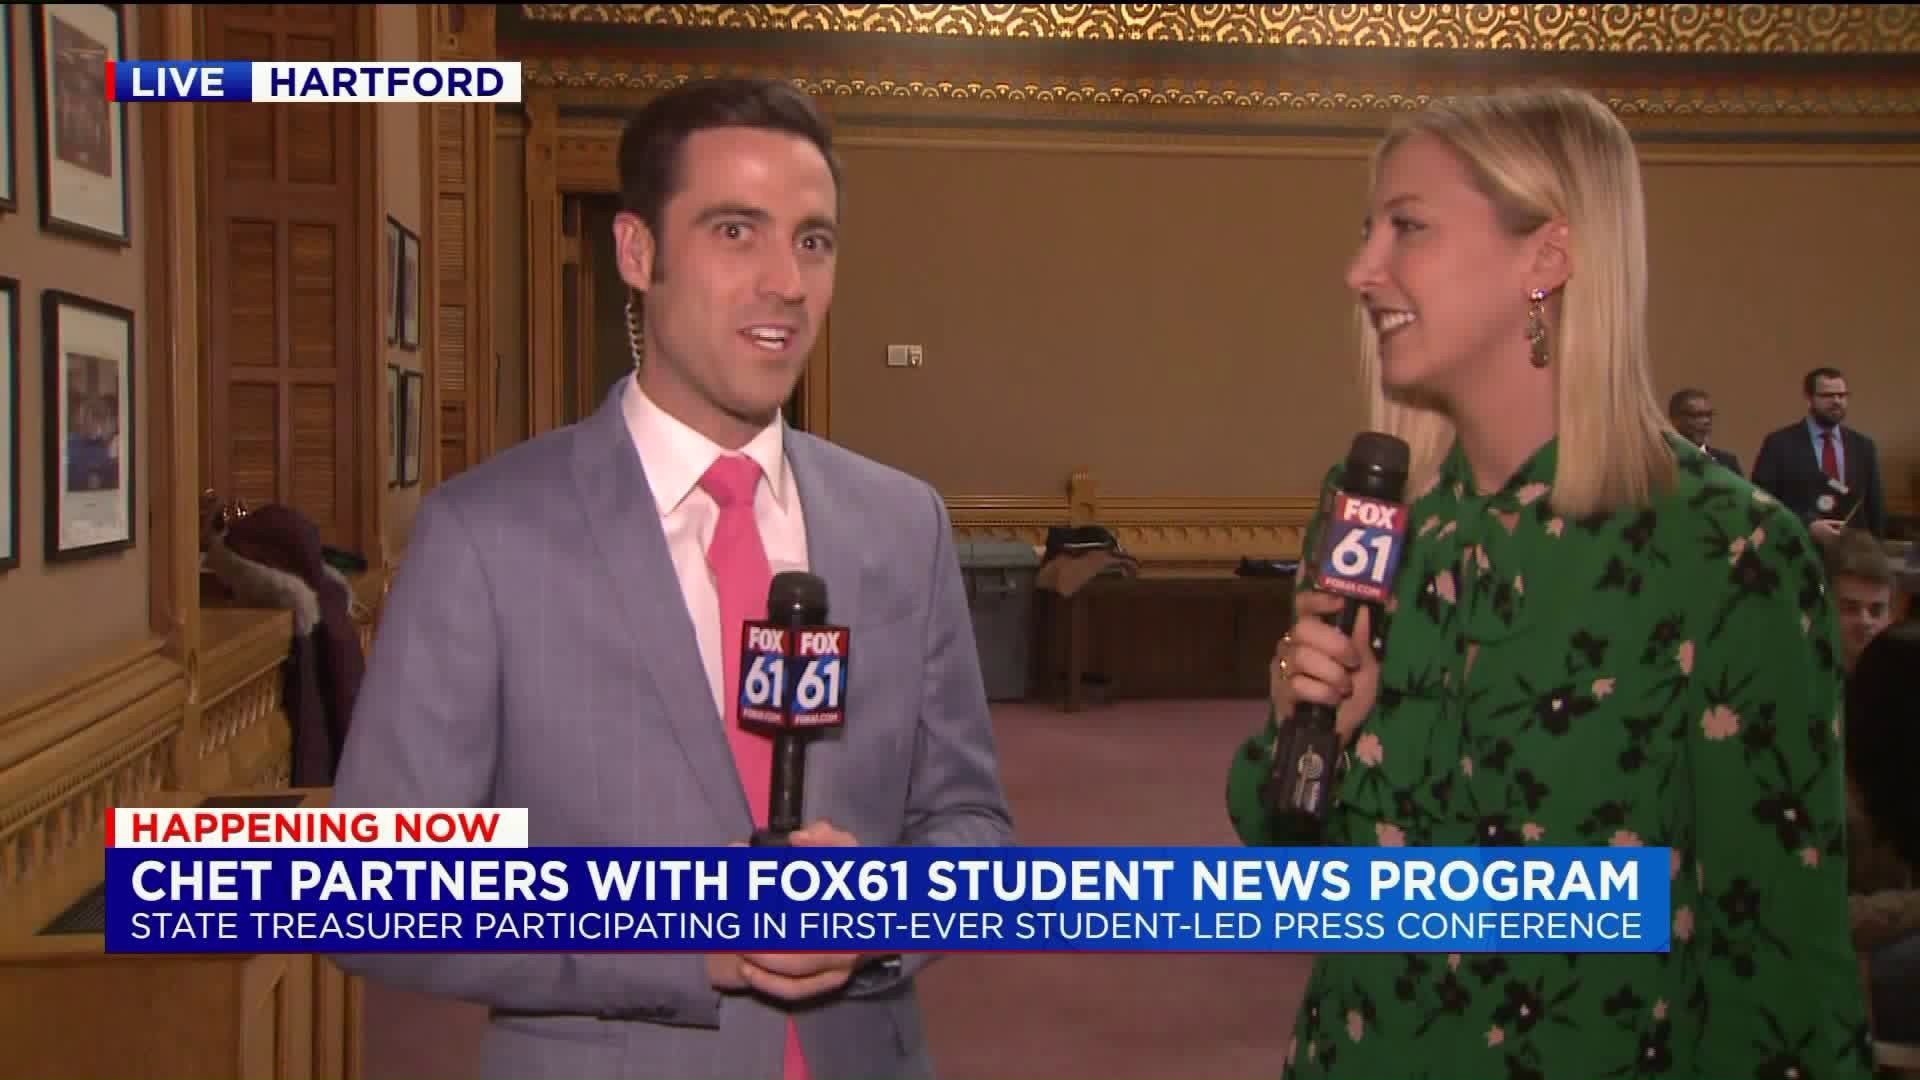 CHET and FOX61 Student News